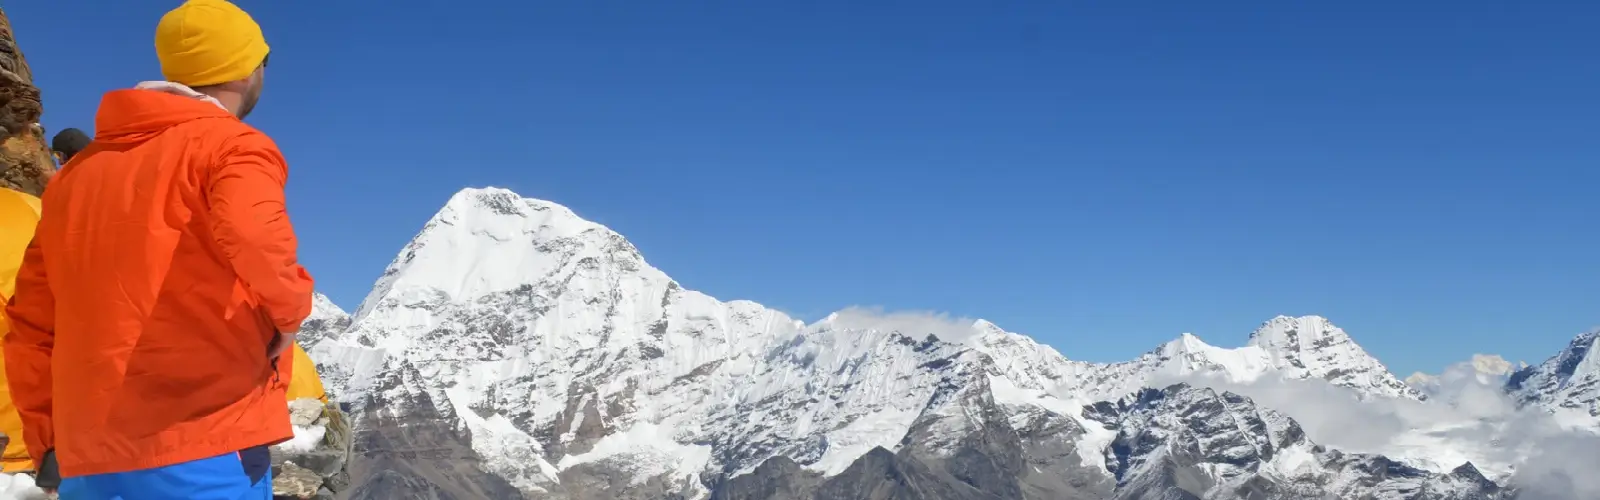 thinchenkhang peak climbing